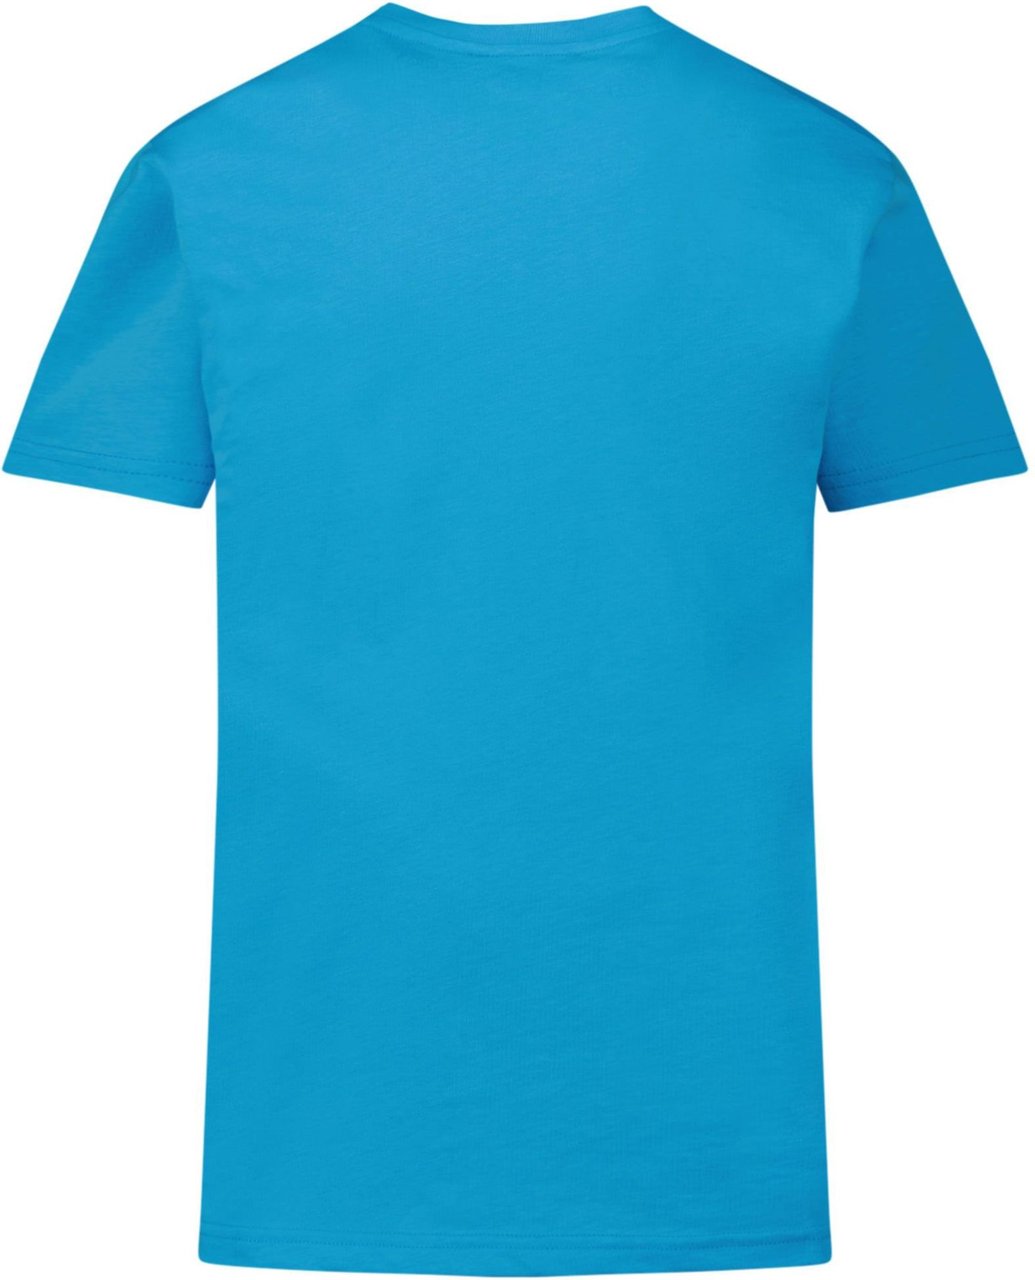 Dsquared2 Dsquared2 DQ1359 D00MV kinder t-shirt turquoise Blauw